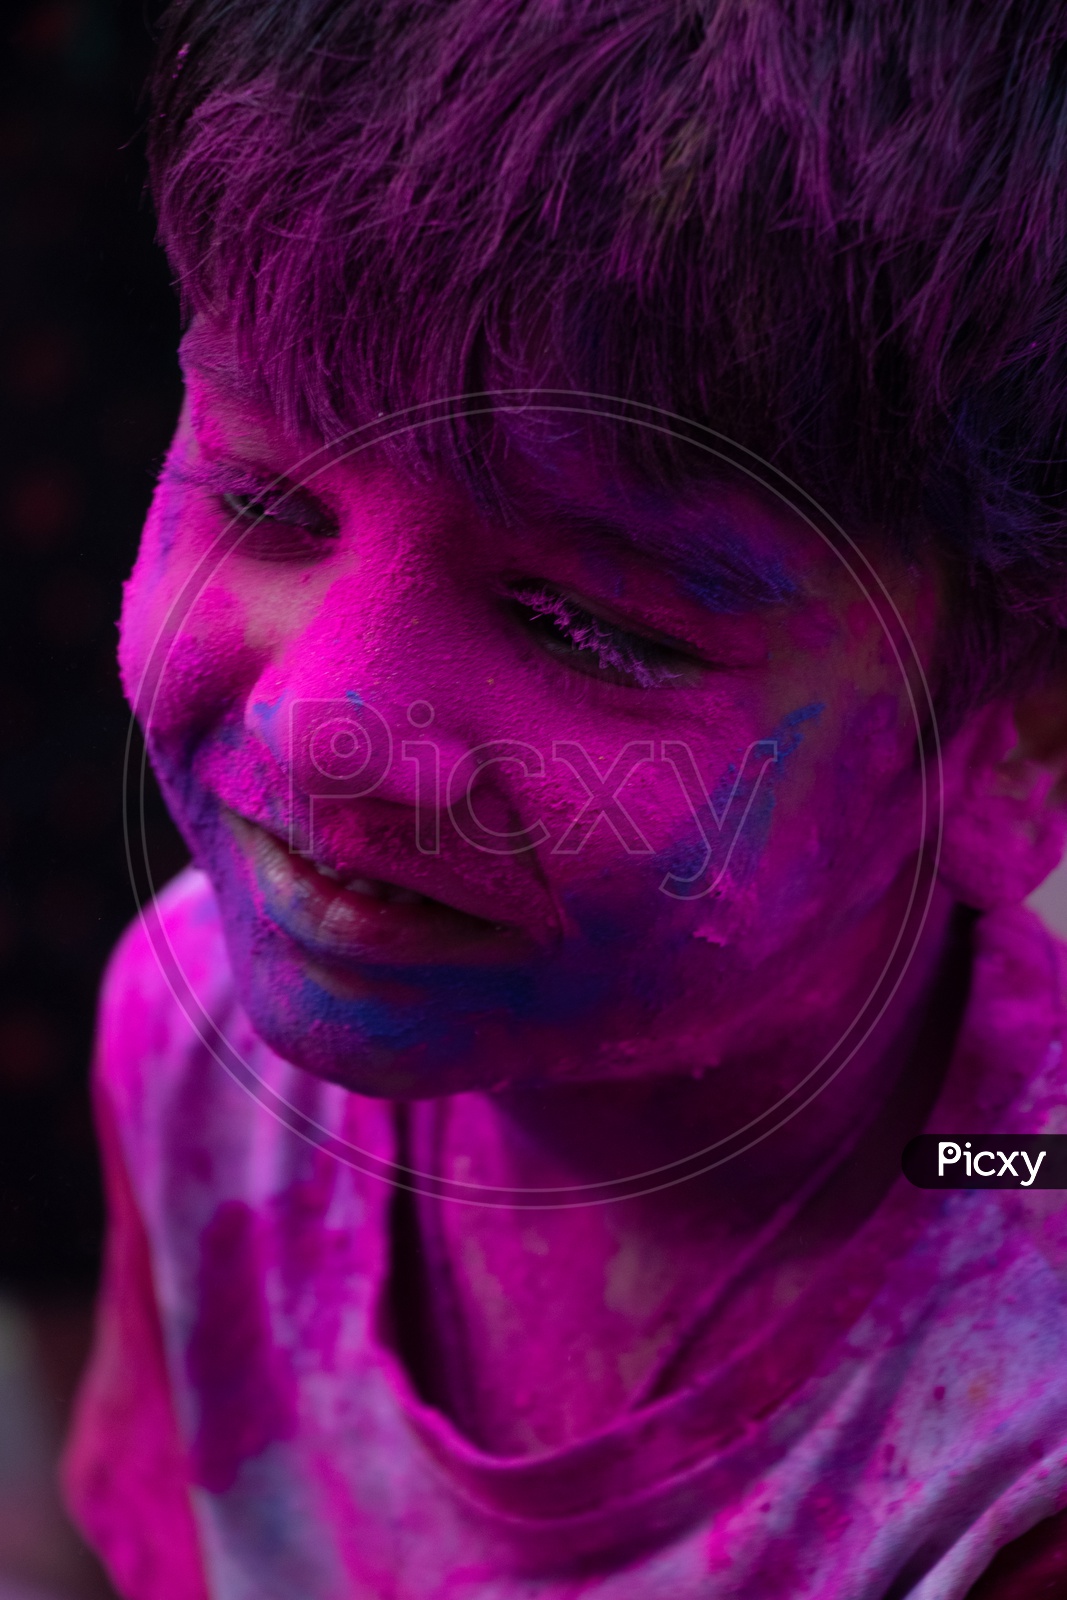 Indian Children Filled in Holi Colors Celebrating Holi Festival